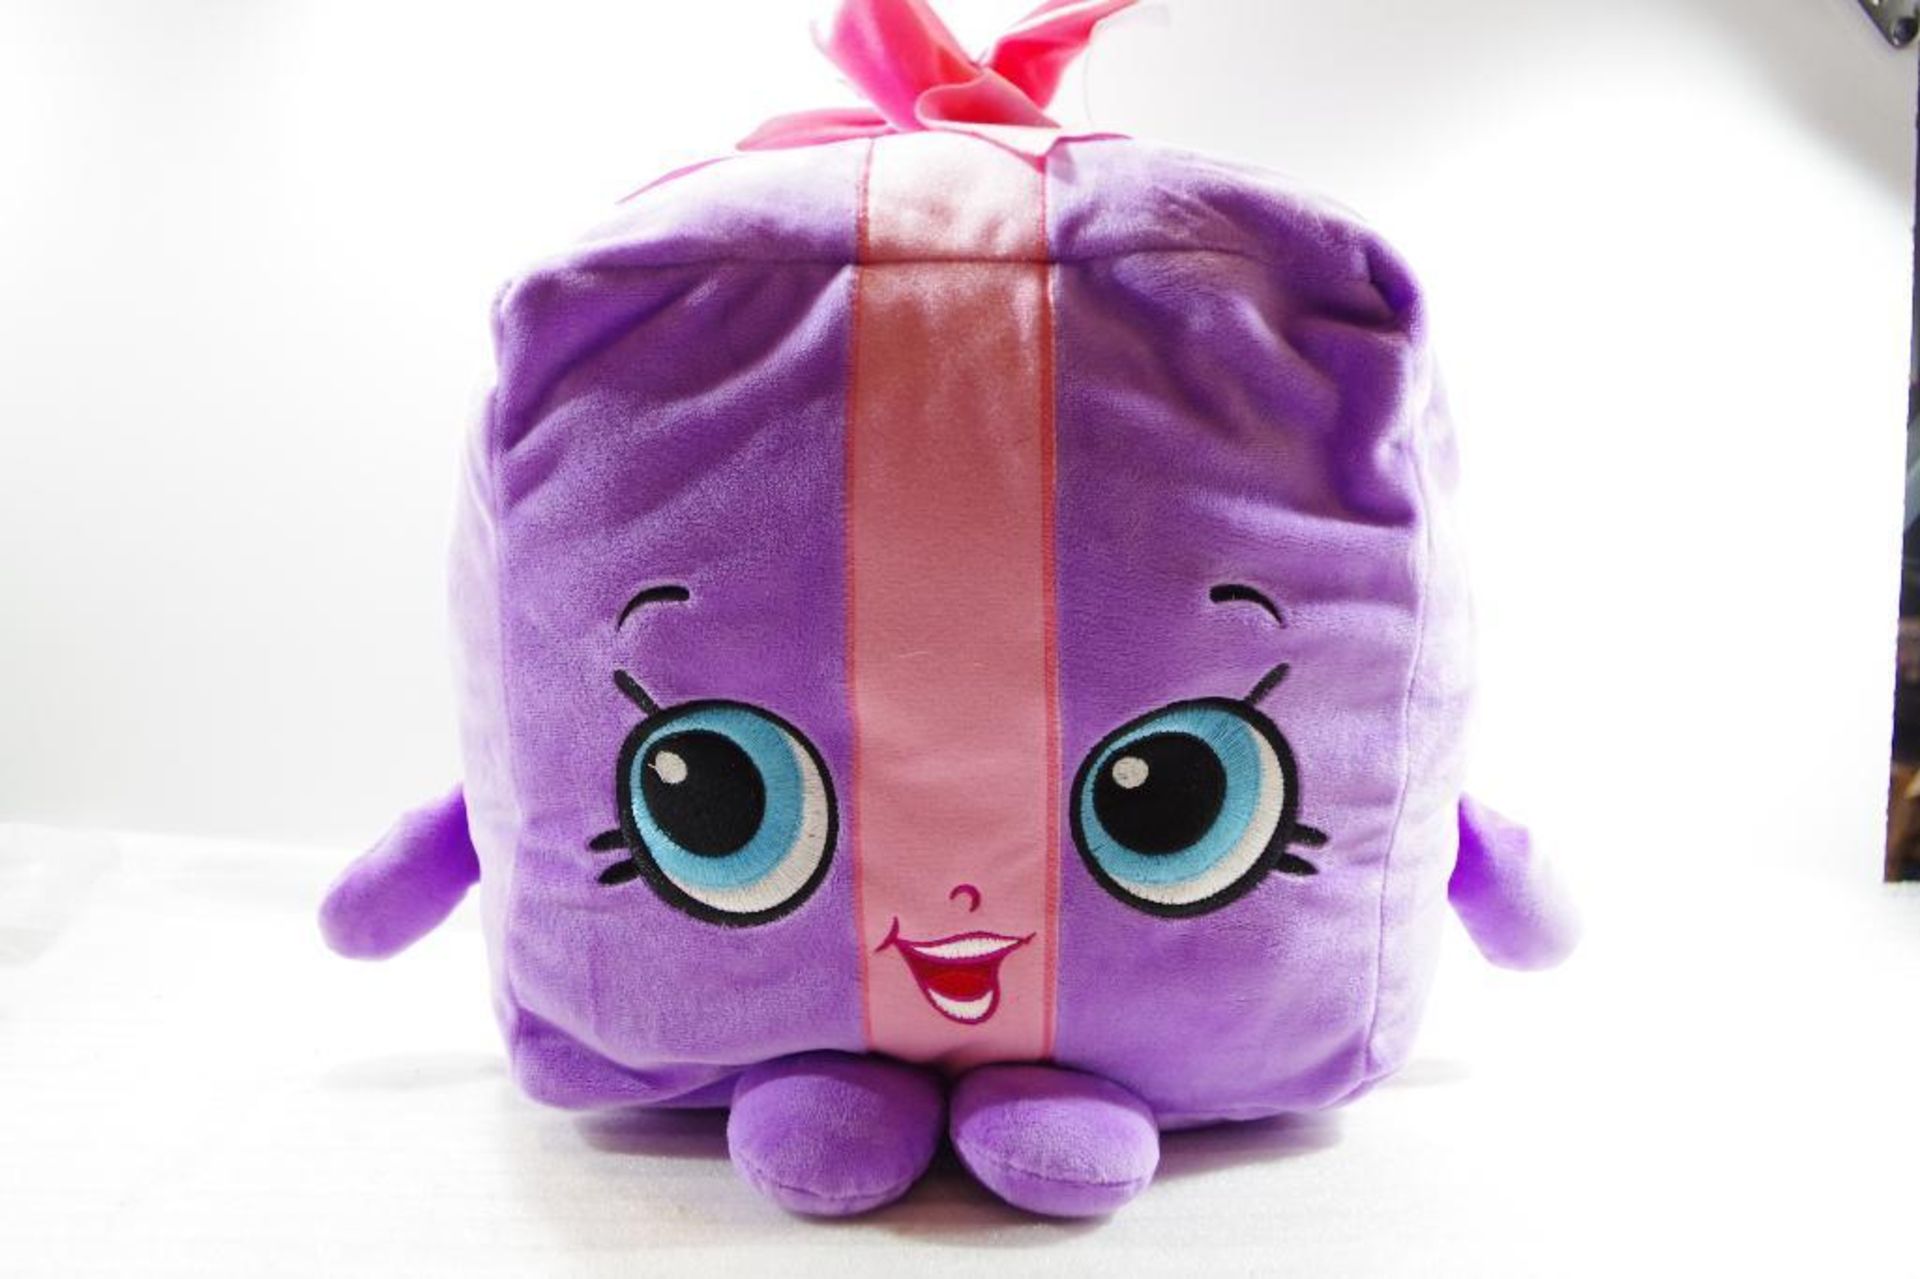 SHOPKINS "Stuffed Animal" Purple Cube w/ Eyes